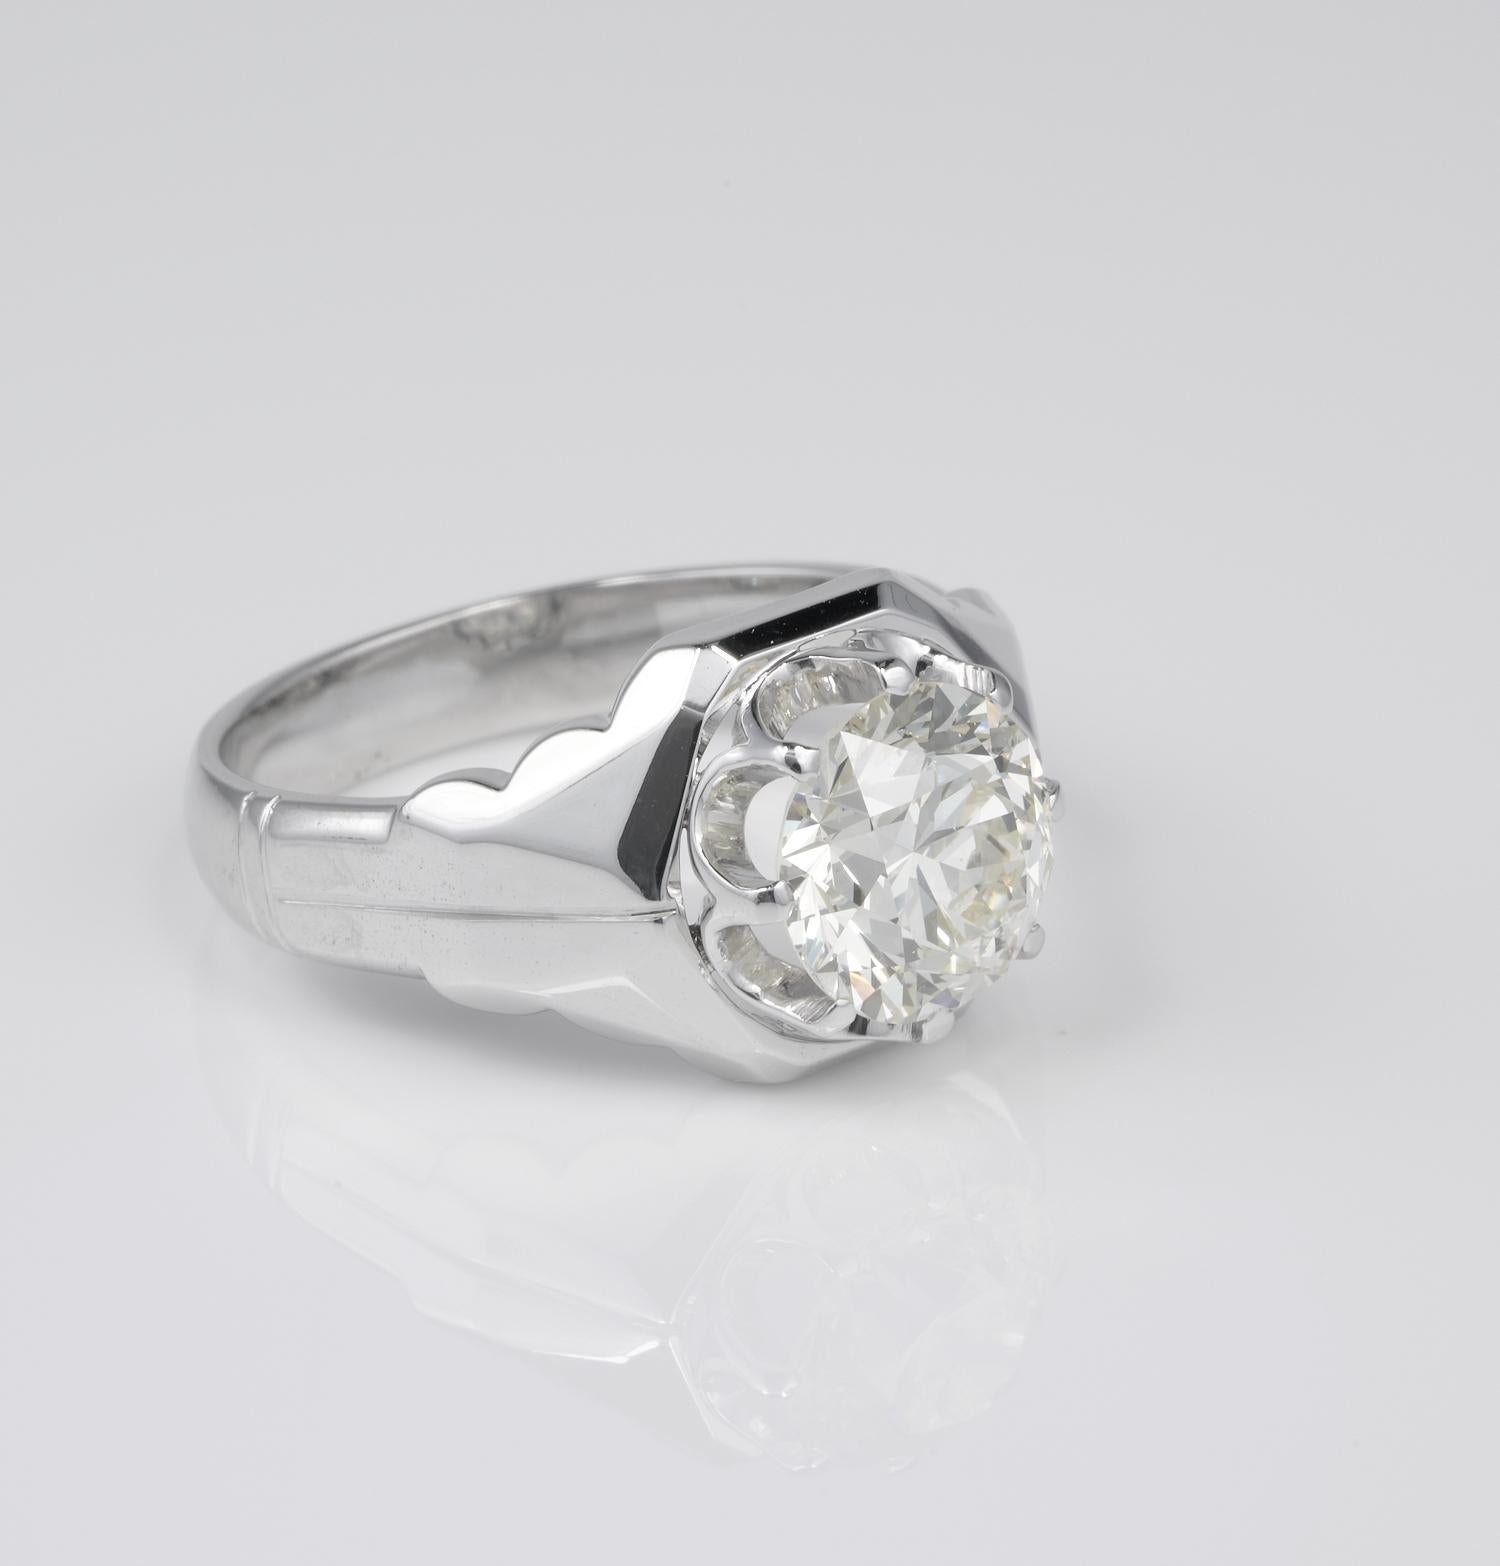 Contemporary Magnificent 3.10 Carat Old Brilliant Cut Diamond Solitaire Unisex Rare Ring For Sale